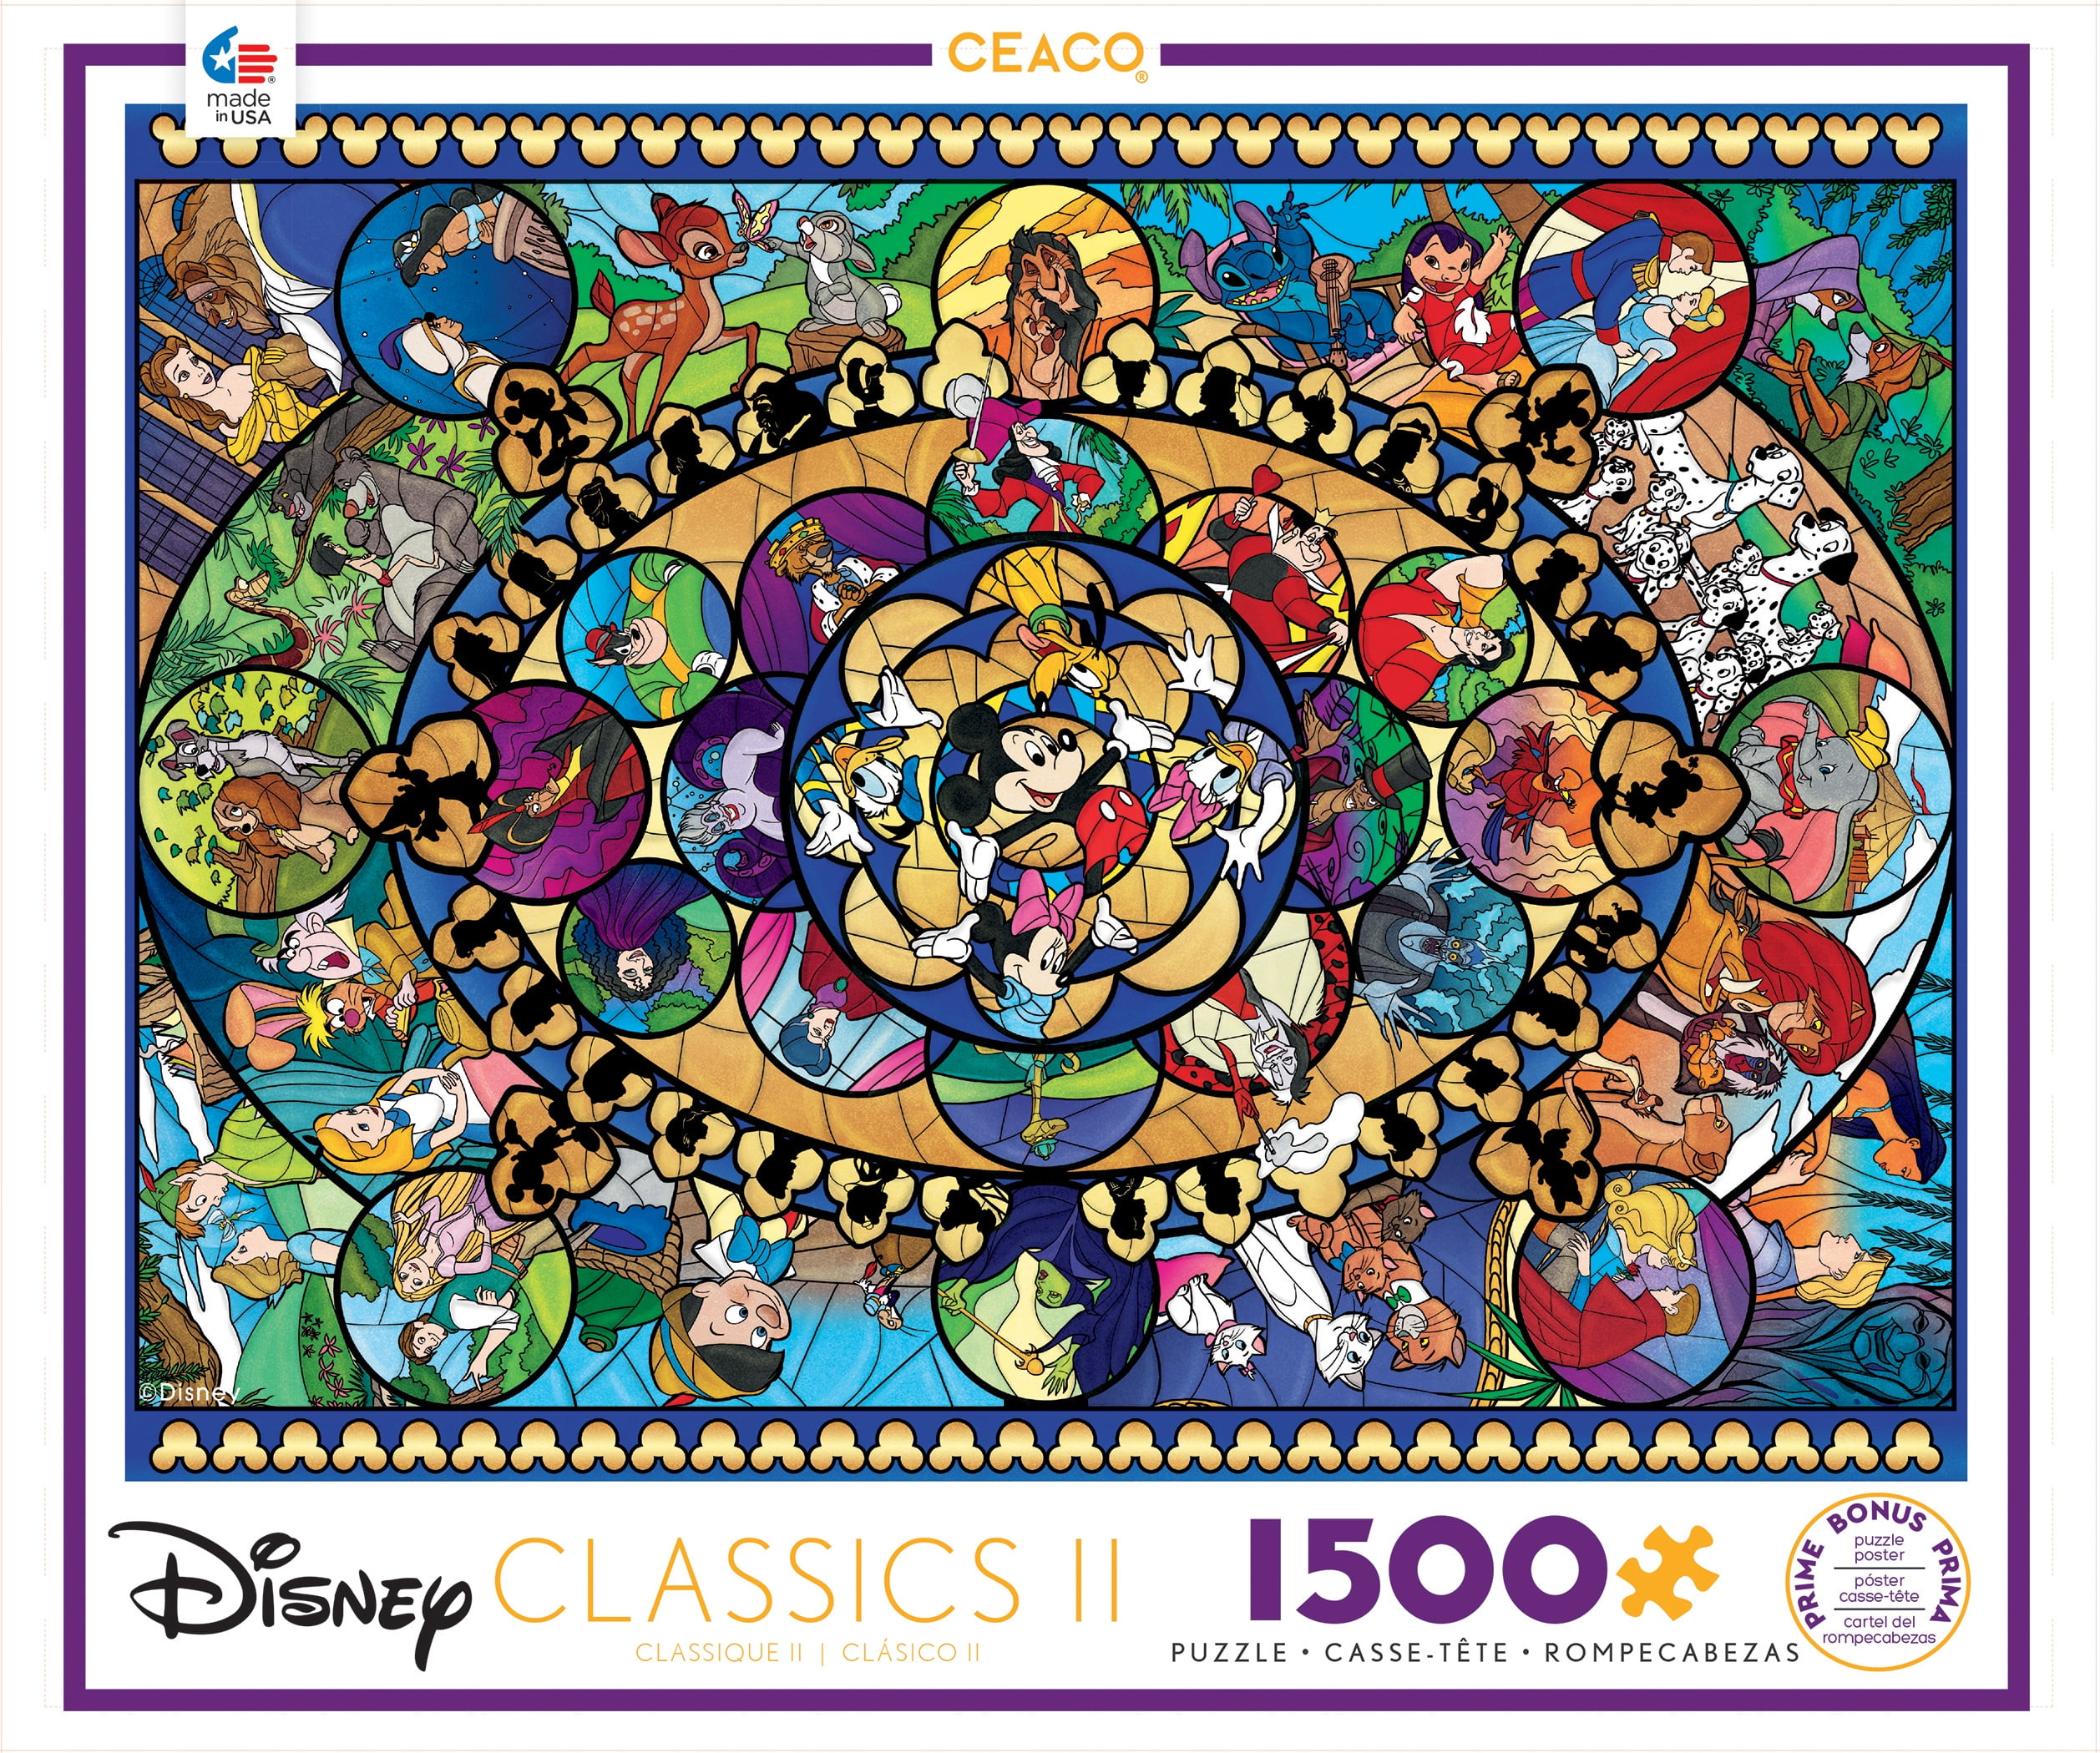 for sale online Ceaco Disney Classics II 1500 PC Puzzle 2019 